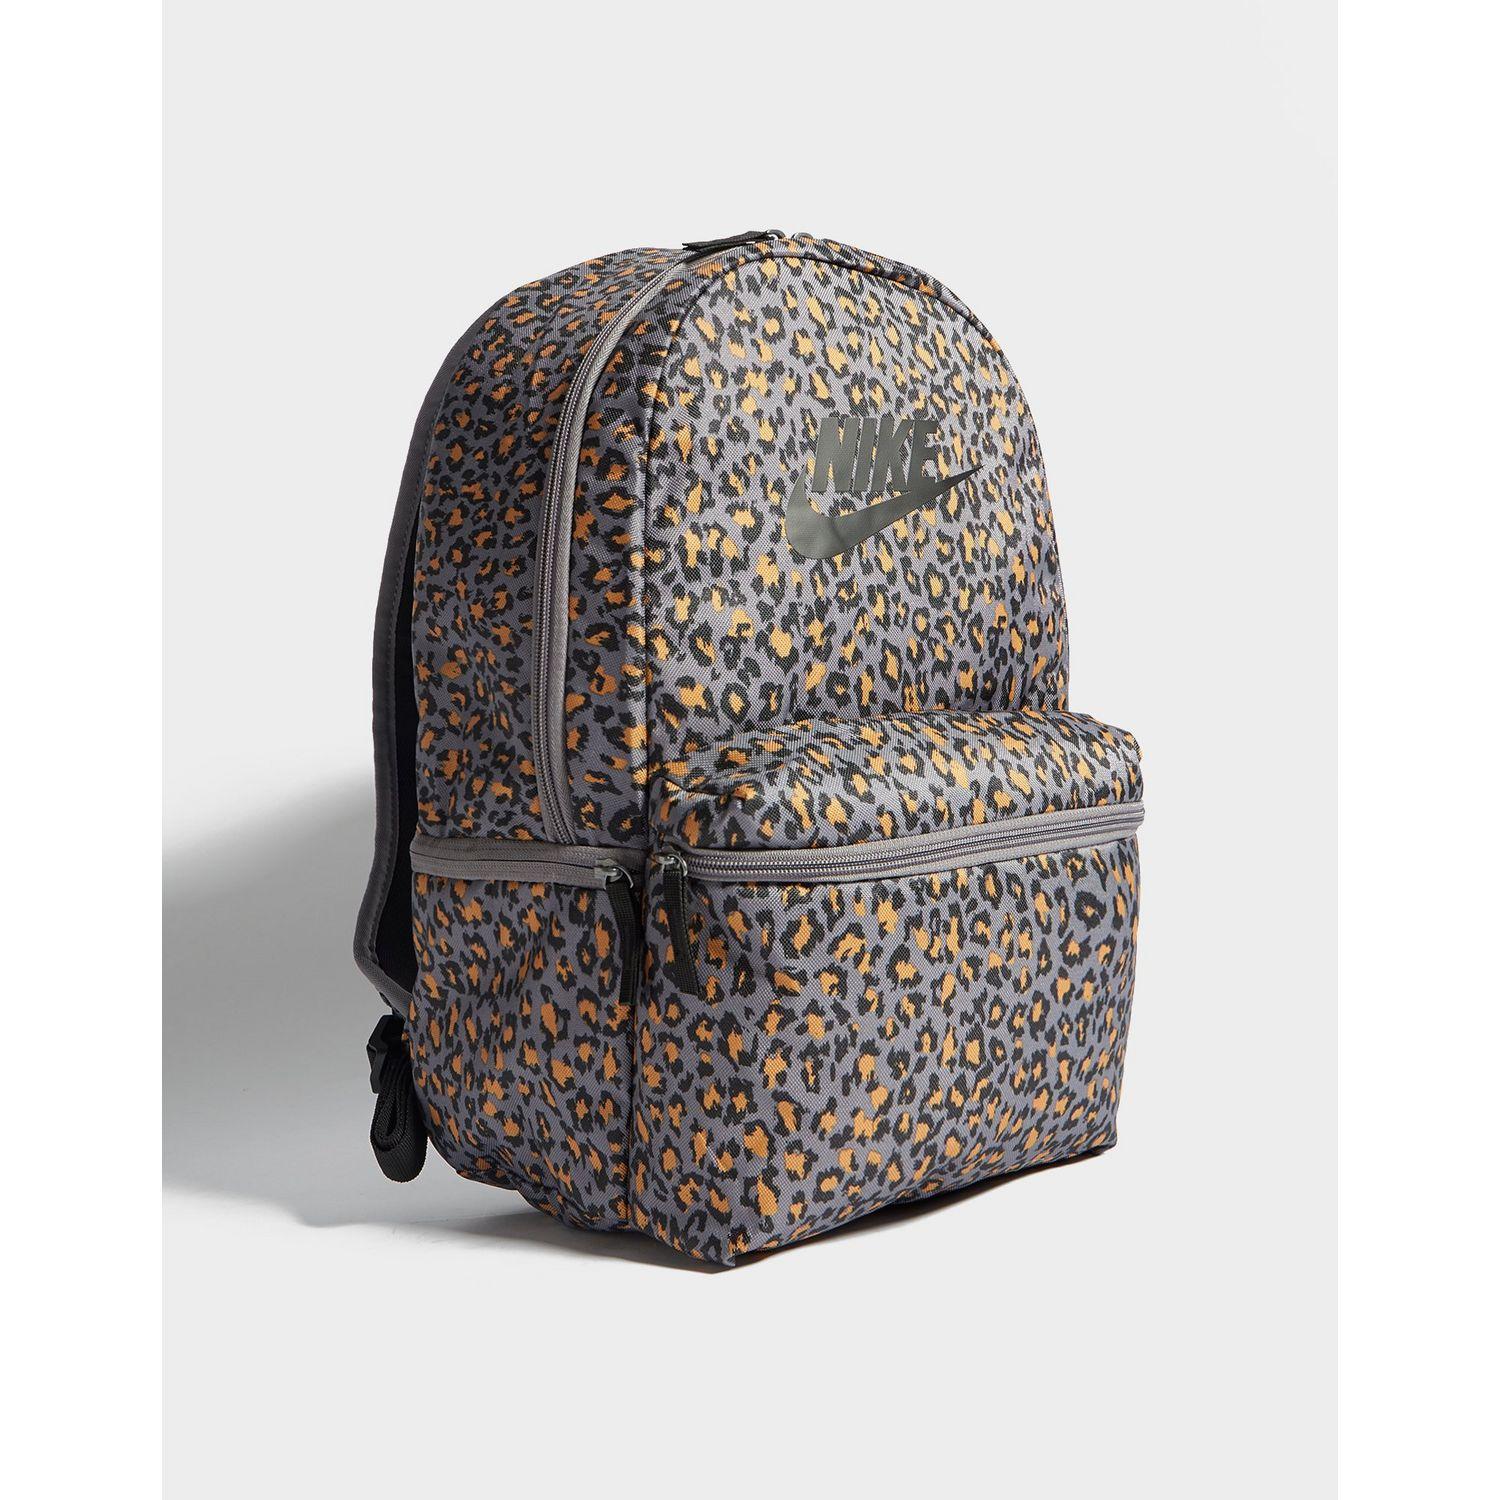 nike heritage leopard backpack